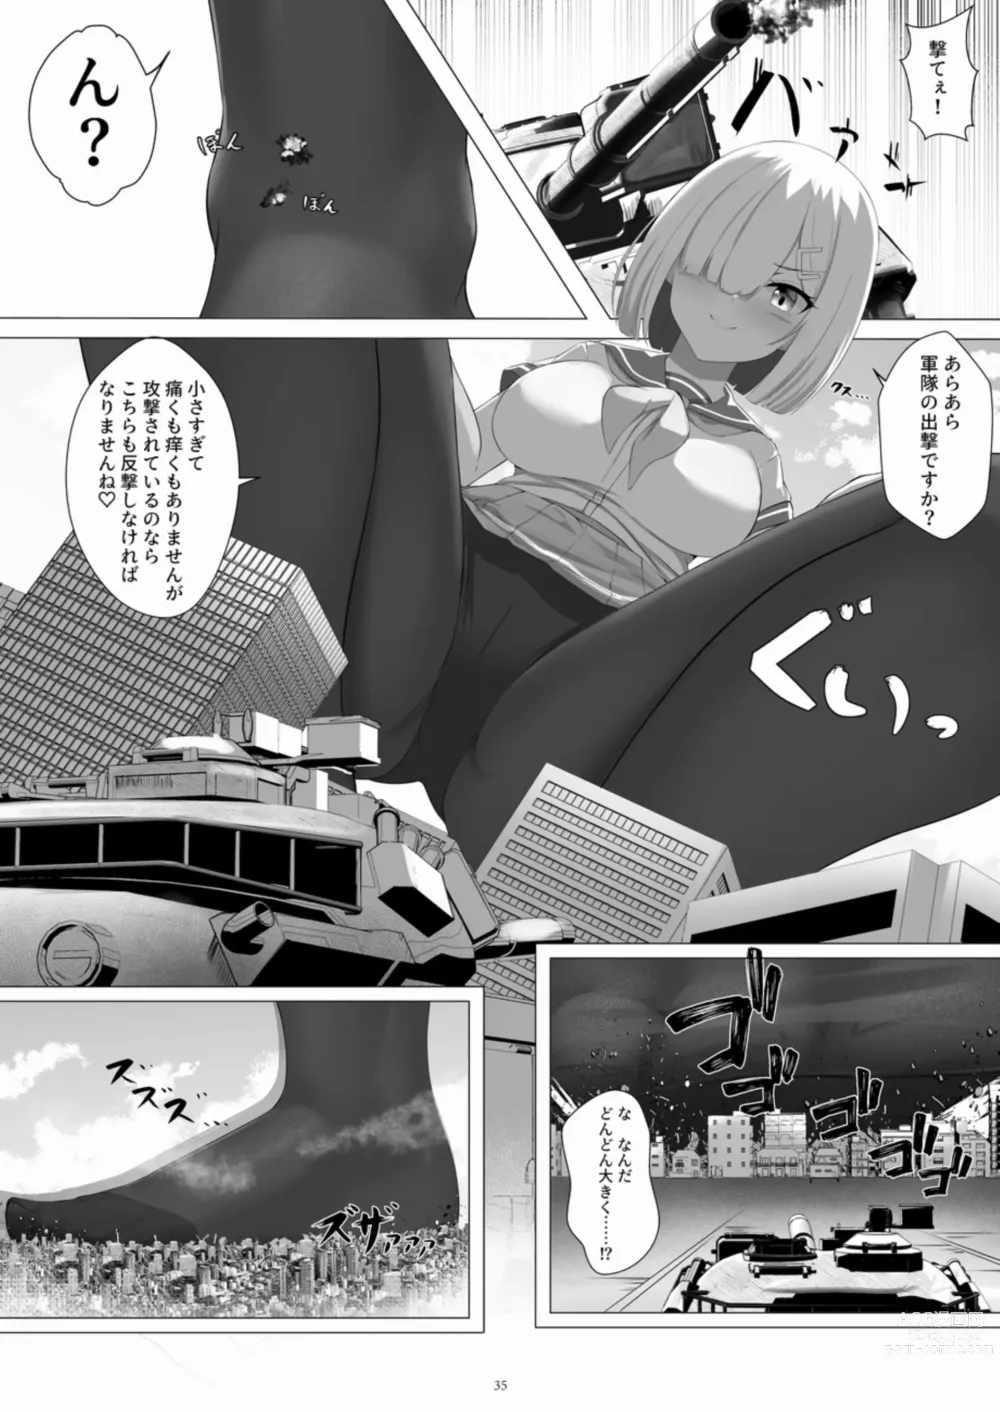 Page 35 of doujinshi Tenshin Ranman Gigantic 8